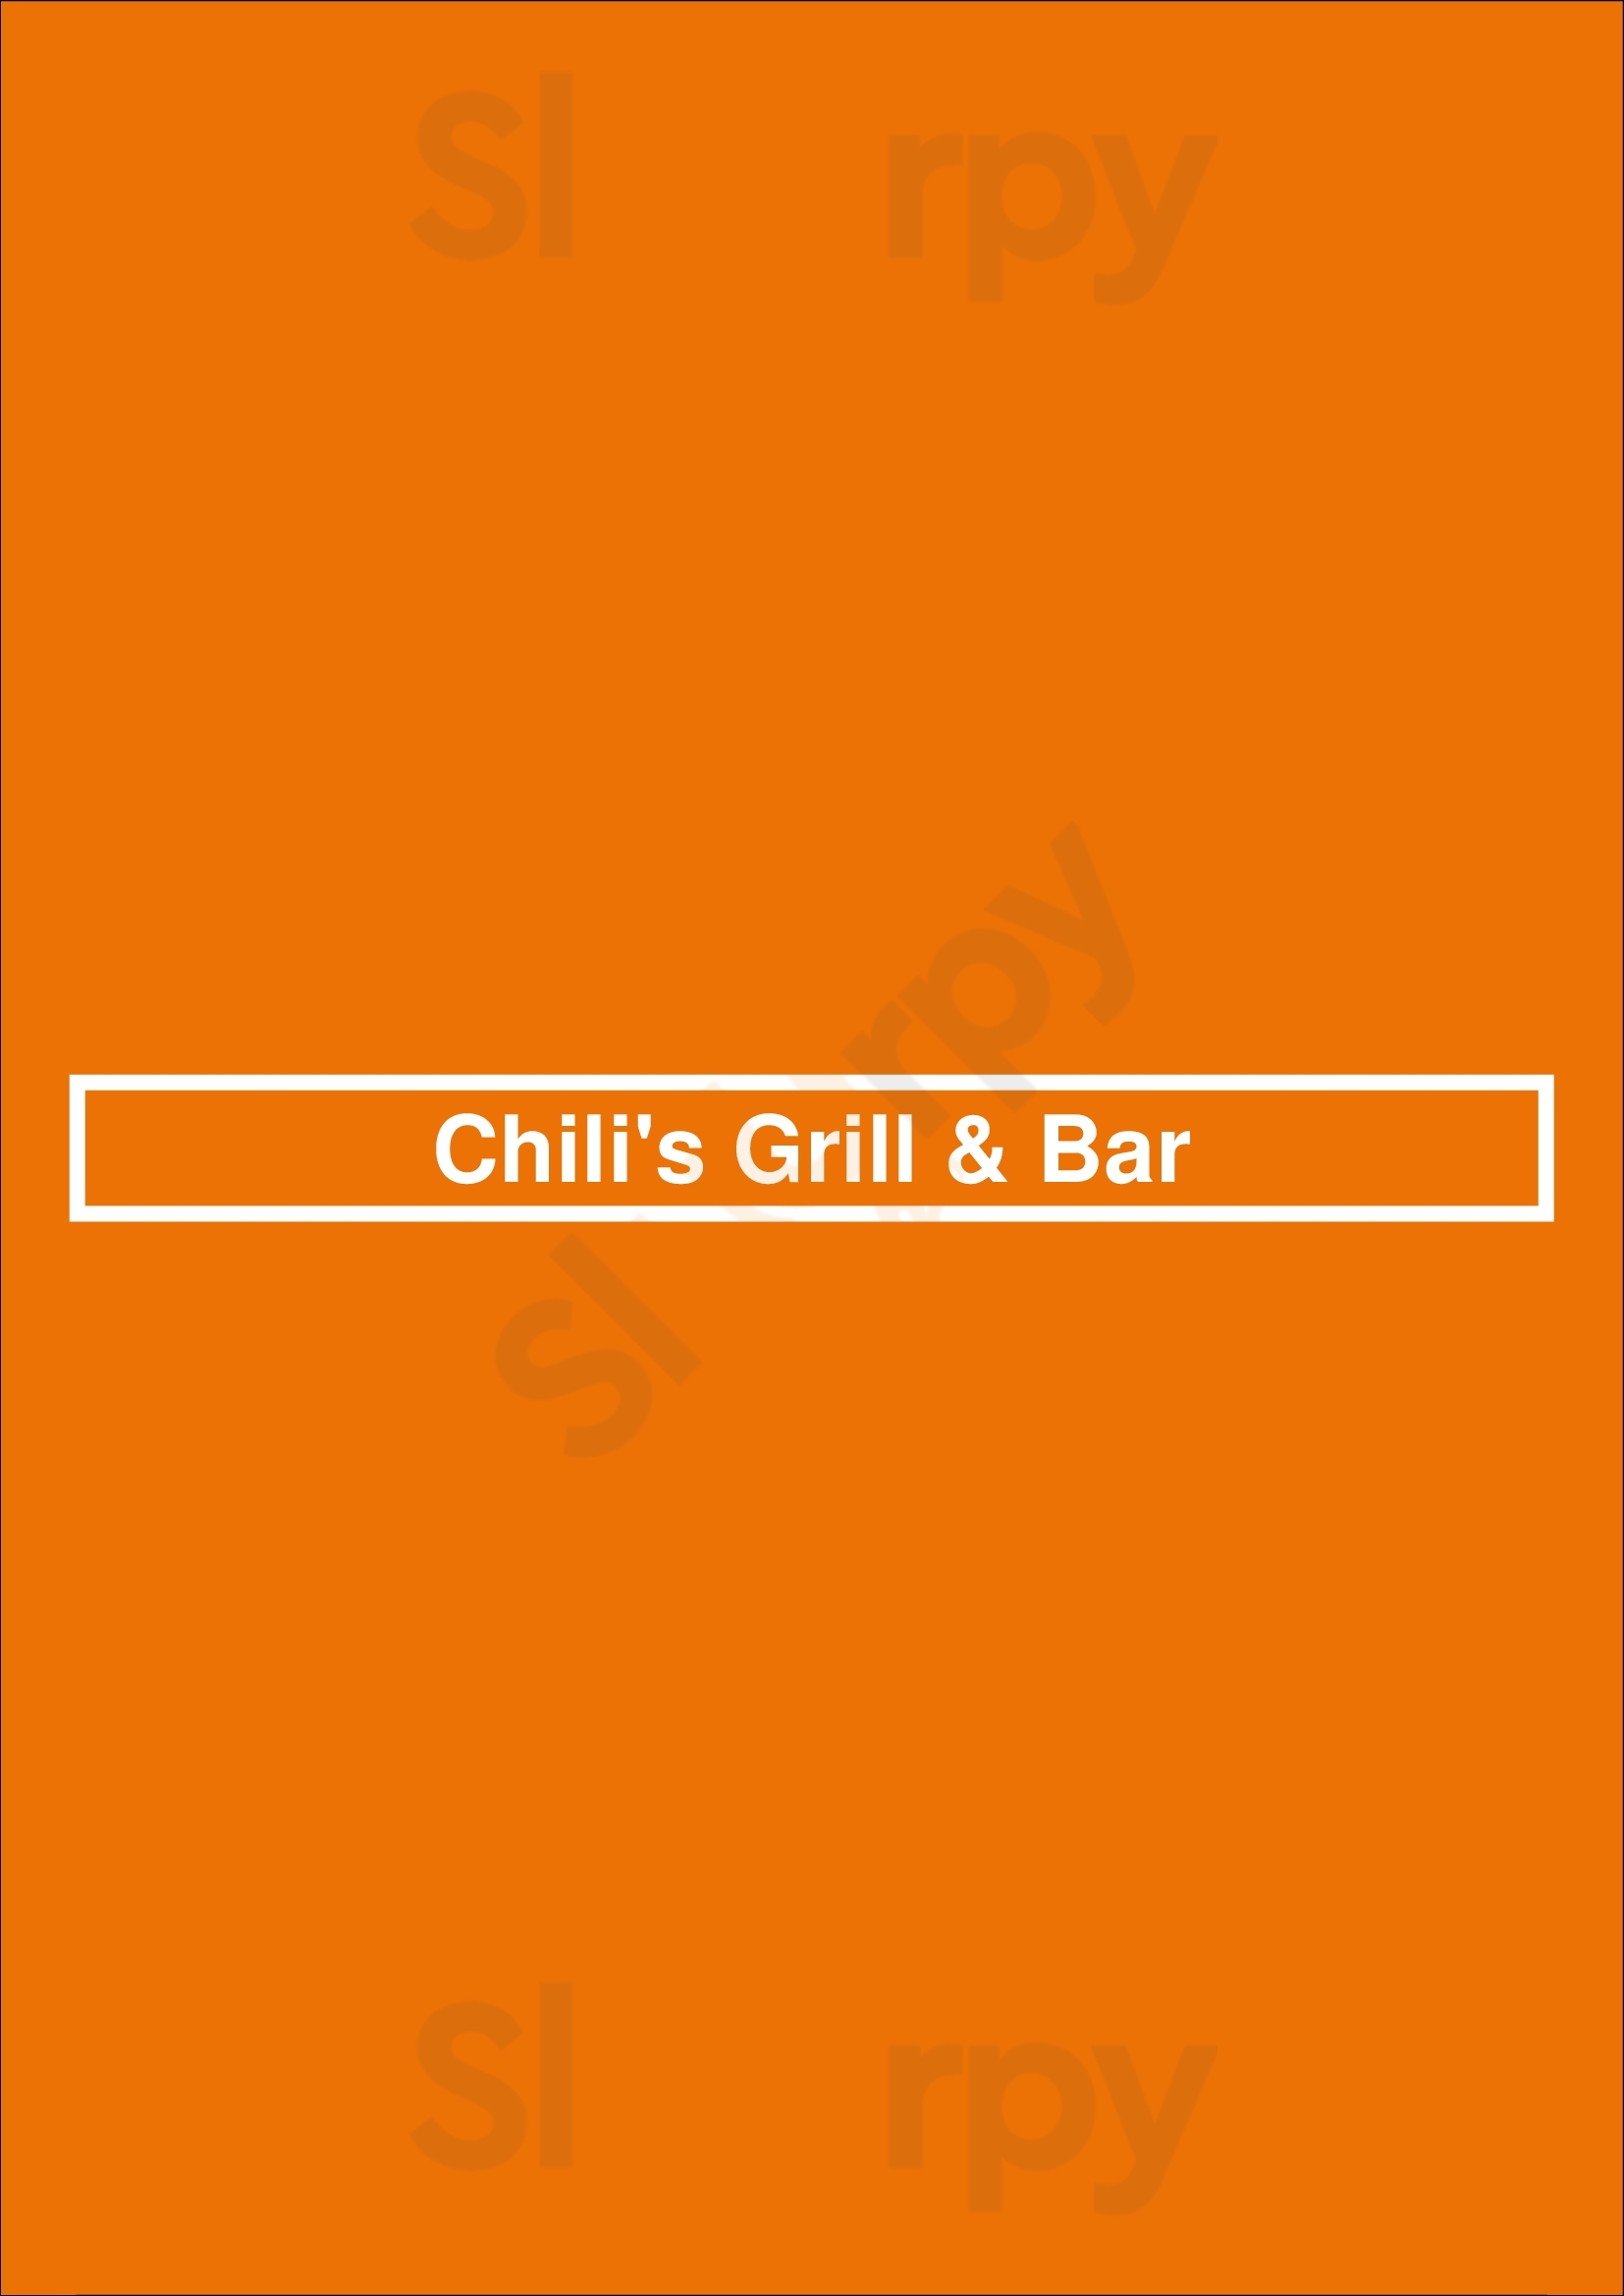 Chili's Grill & Bar Nashville Menu - 1